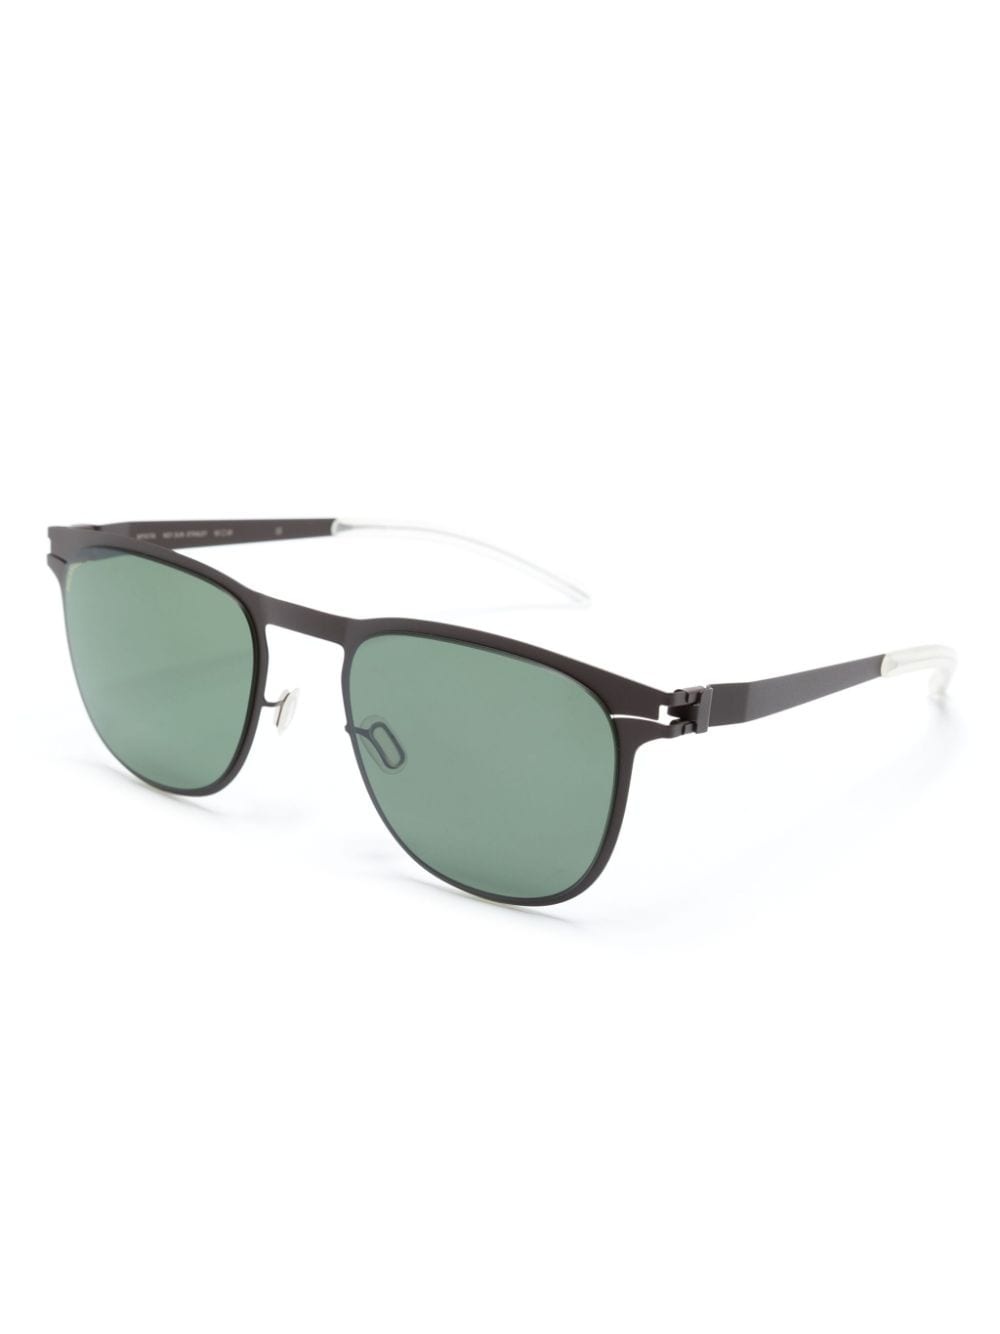 Stanley 456 square-frame sunglasses - 2